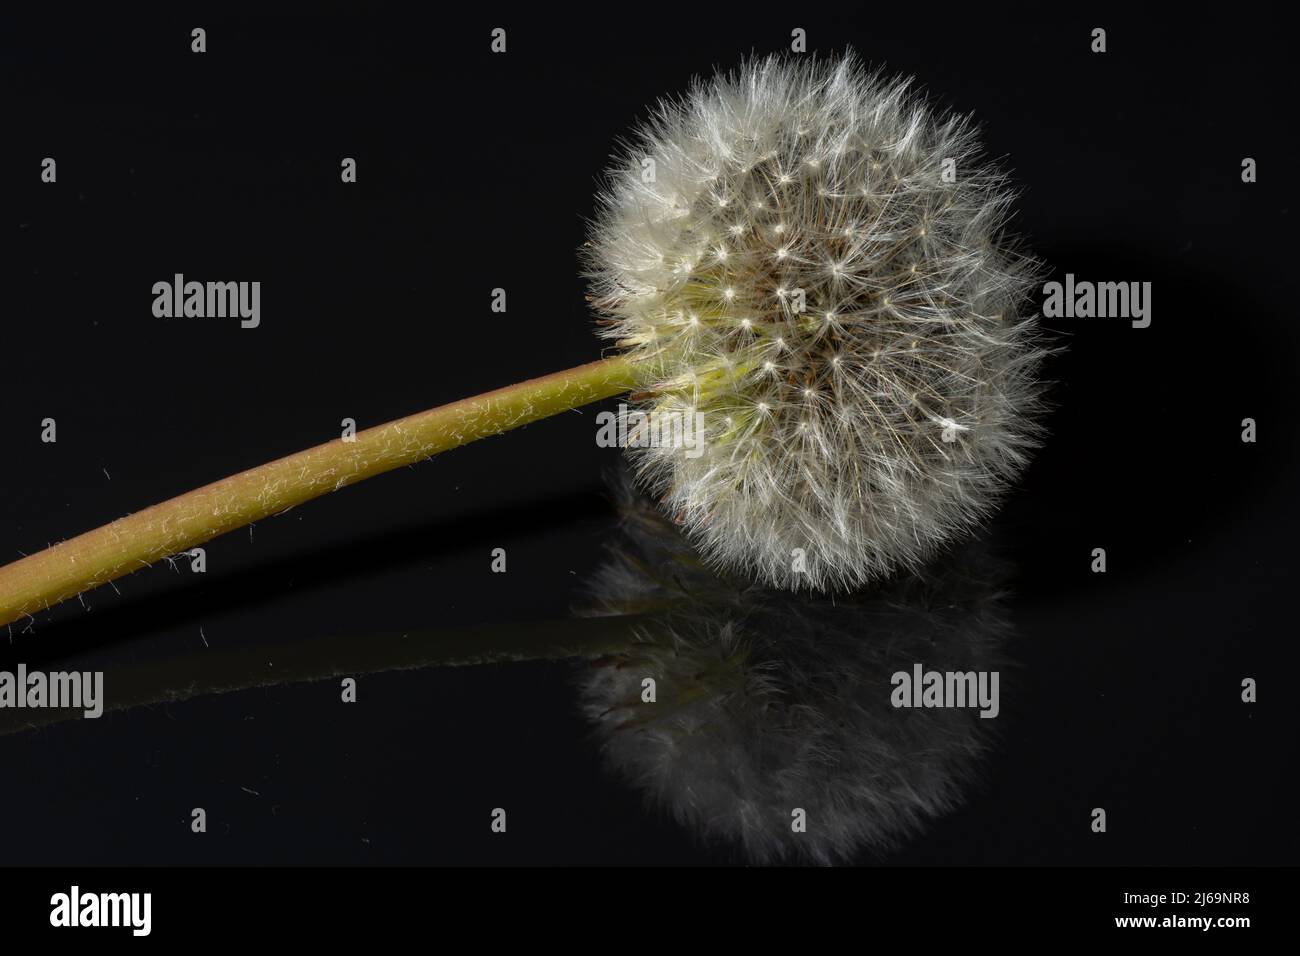 Dandelion (Taraxacum)  blowball or seed head on reflective black background. Close up. Stock Photo